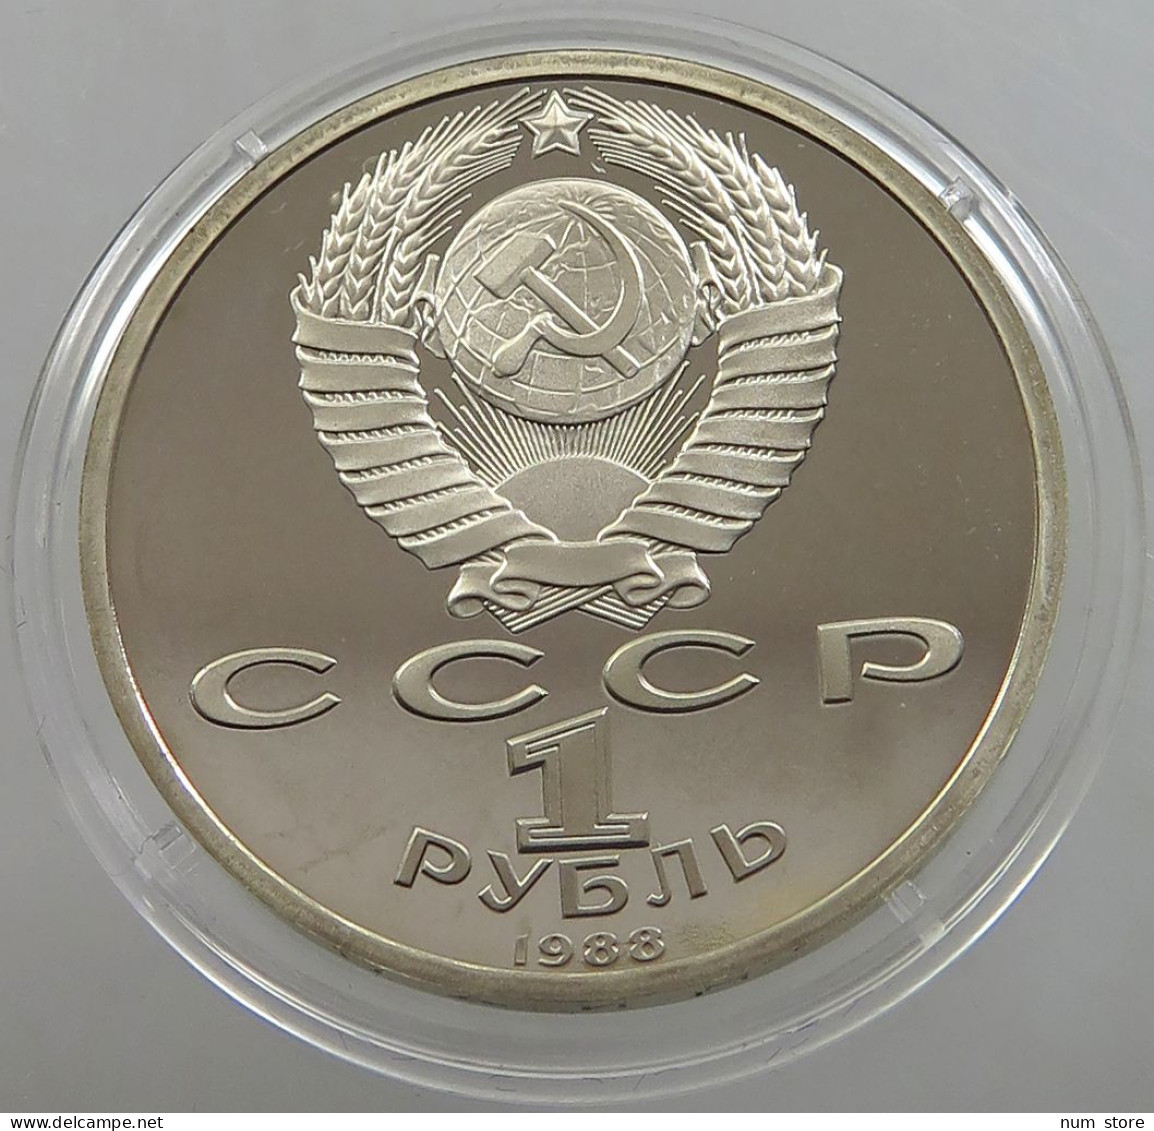 RUSSIA USSR 1 ROUBLE 1988 GORKI PROOF #sm14 0539 - Russia